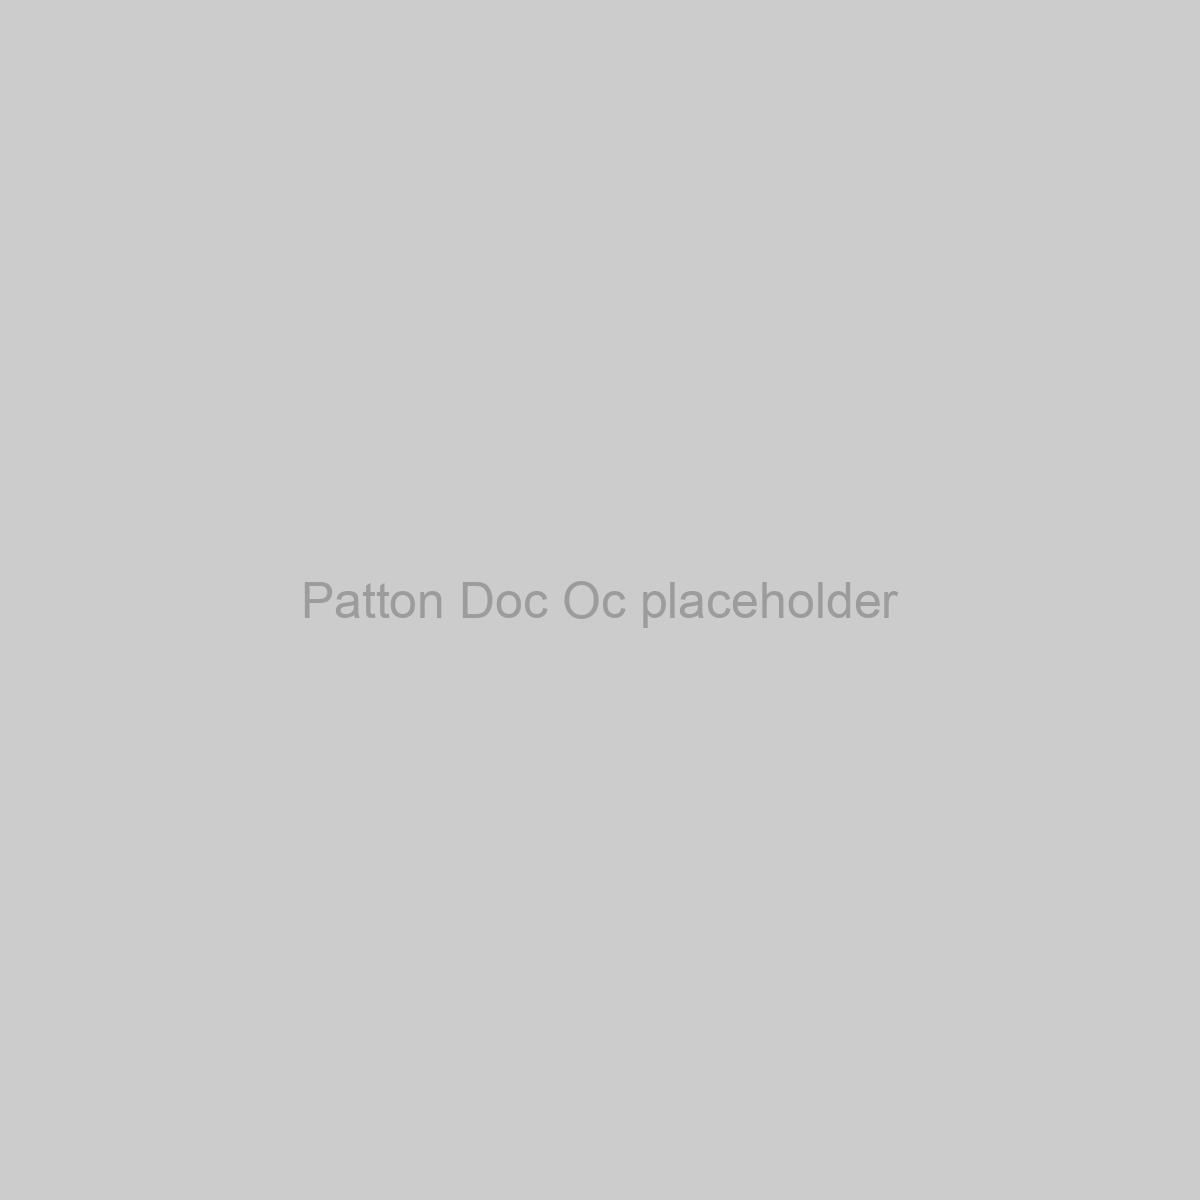 Patton Doc Oc Placeholder Image